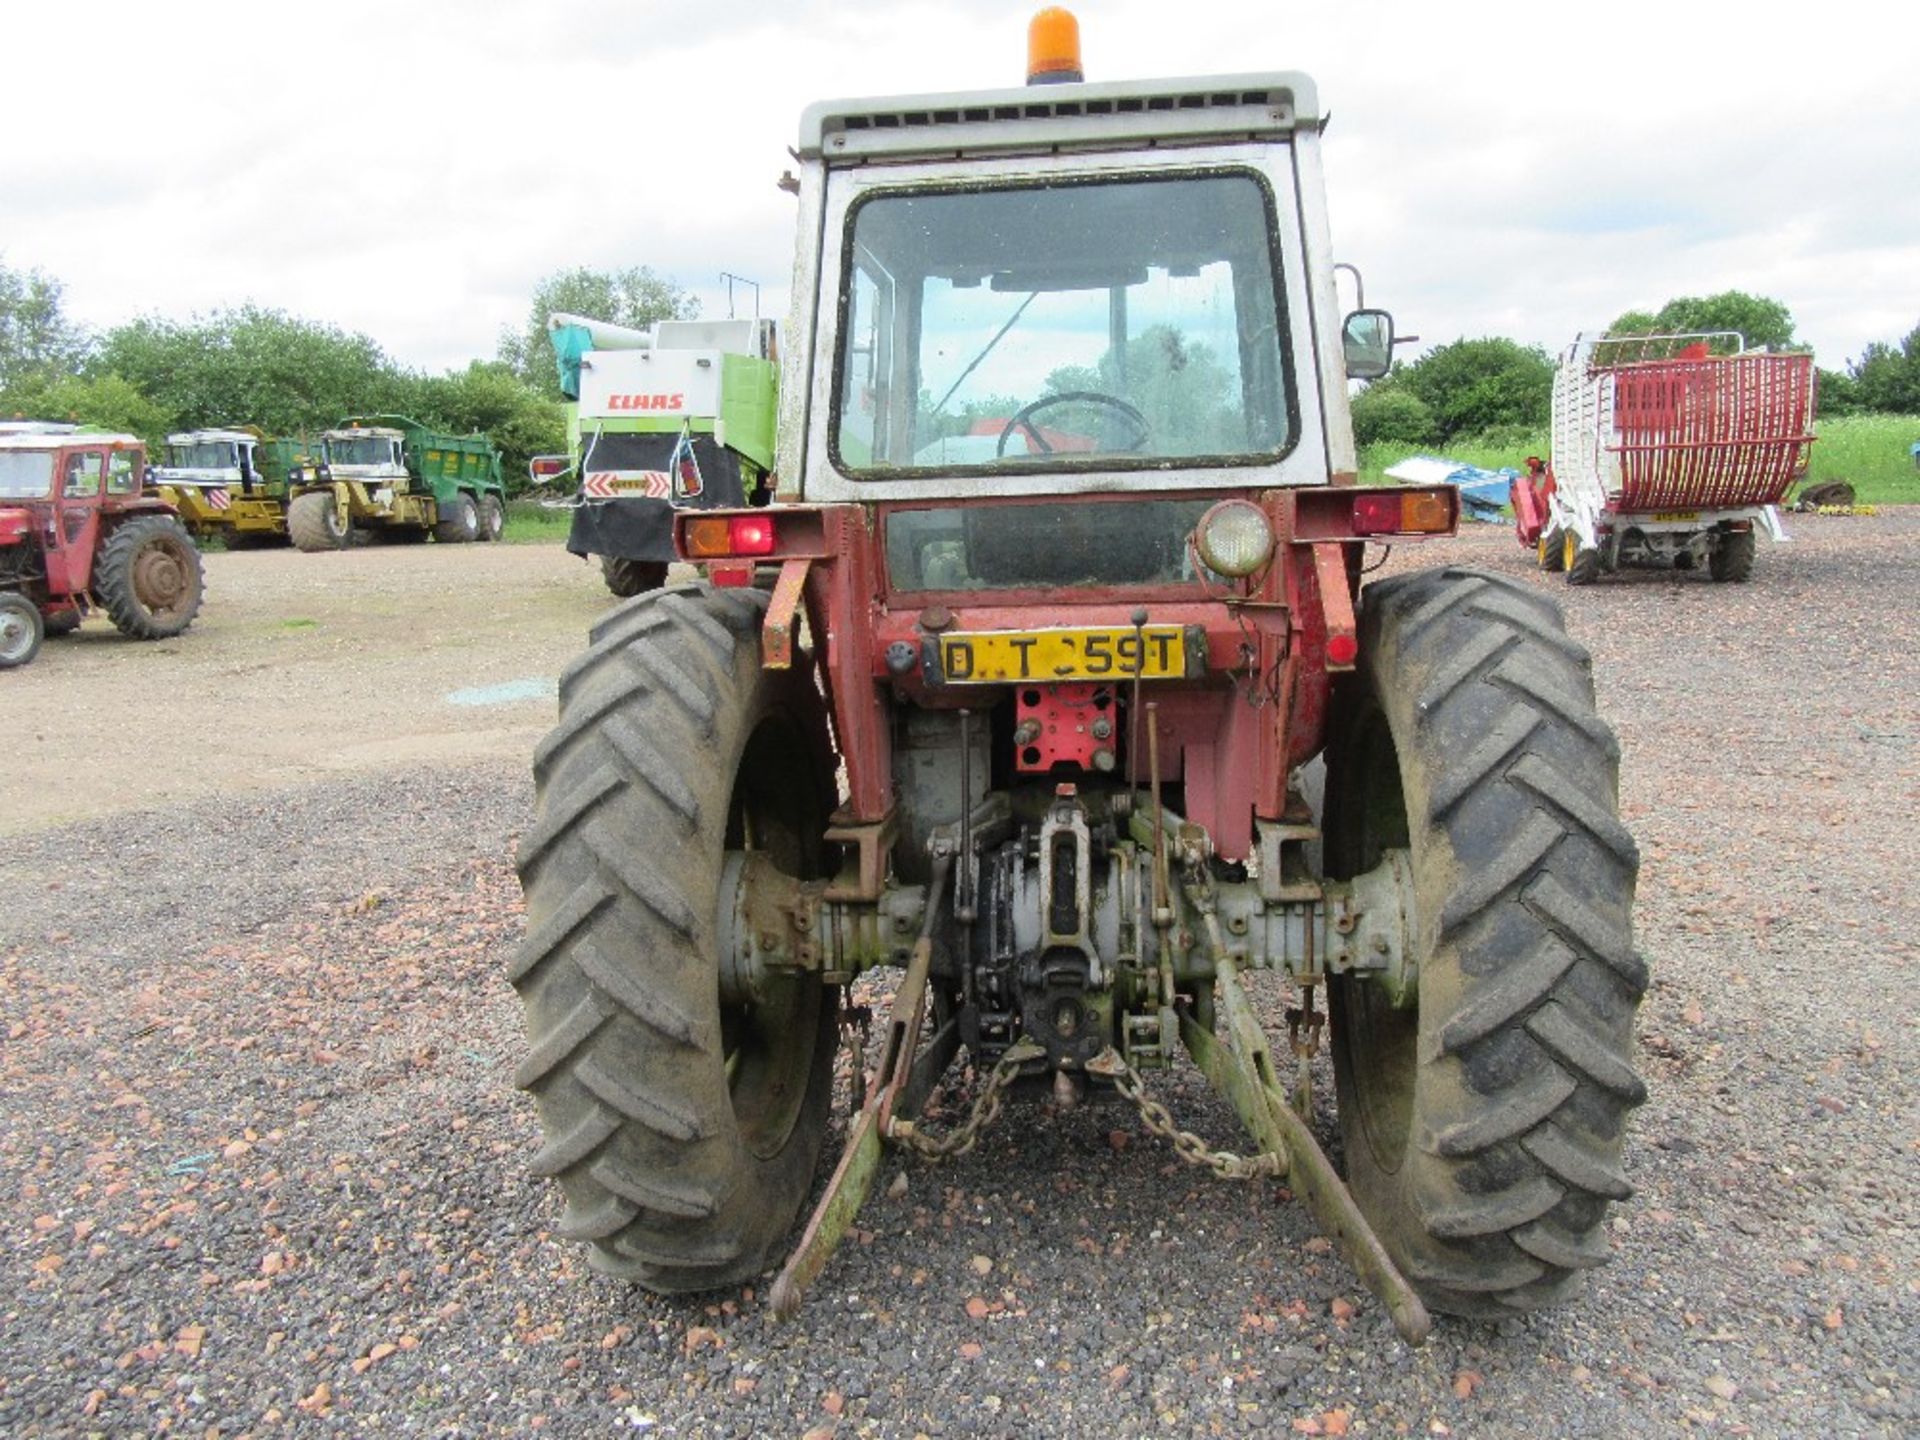 Massey Ferguson 590 Tractor. No V5. Reg.No. DRT 359T  Ser.No. 378776 - Image 4 of 5